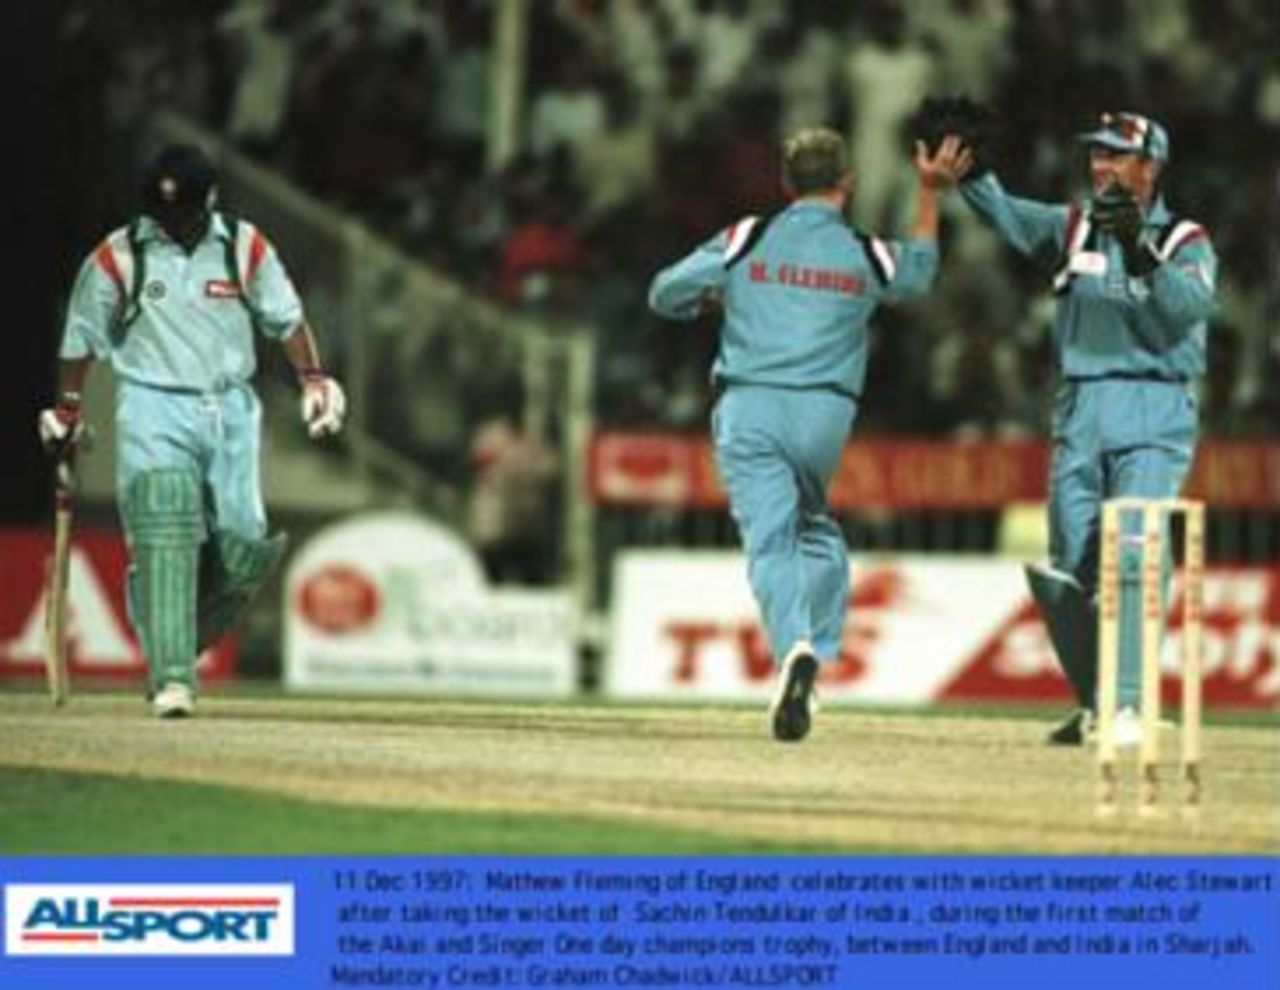 Champion's Trophy, December 1997. England v India, 11 Dec 1997: Fleming and Stewart celebrate Tendulkar's dismissal